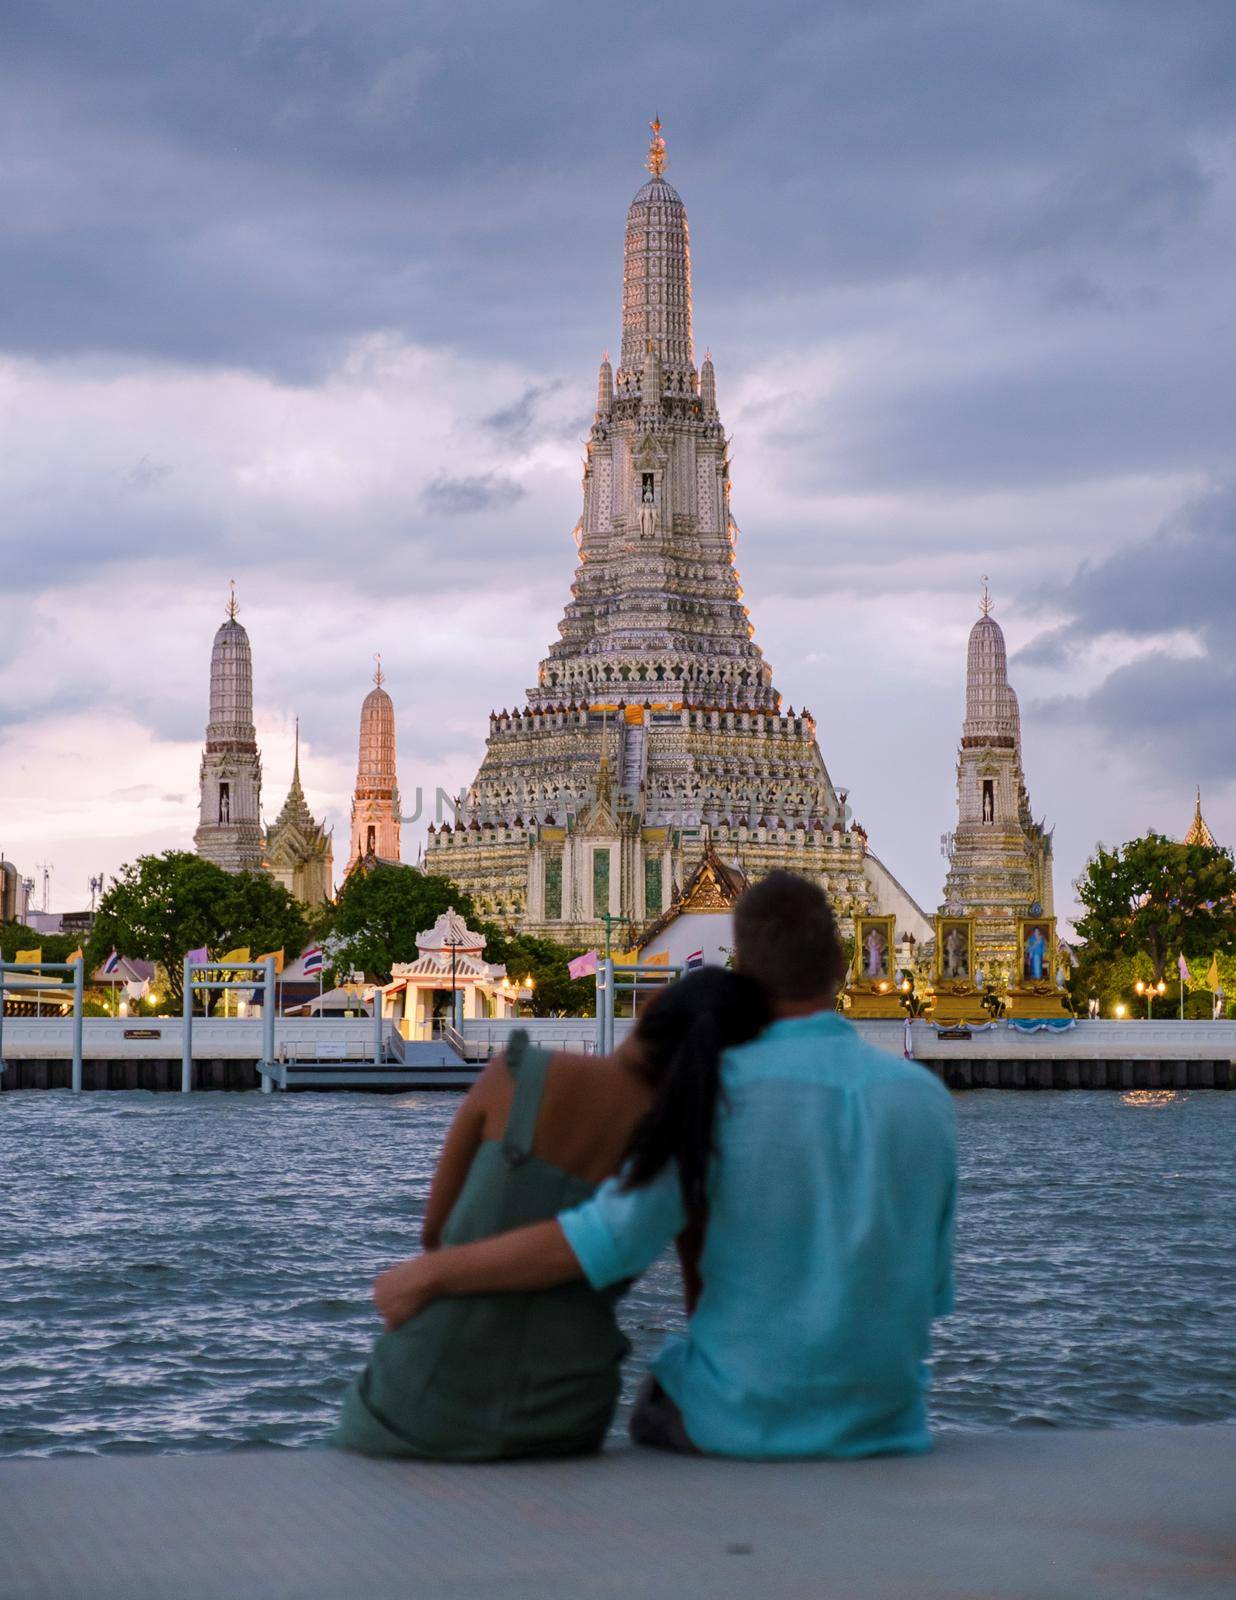 Wat Arun temple Bangkok Thailand, Temple of Dawn, Buddhist temple alongside Chao Phraya River by fokkebok